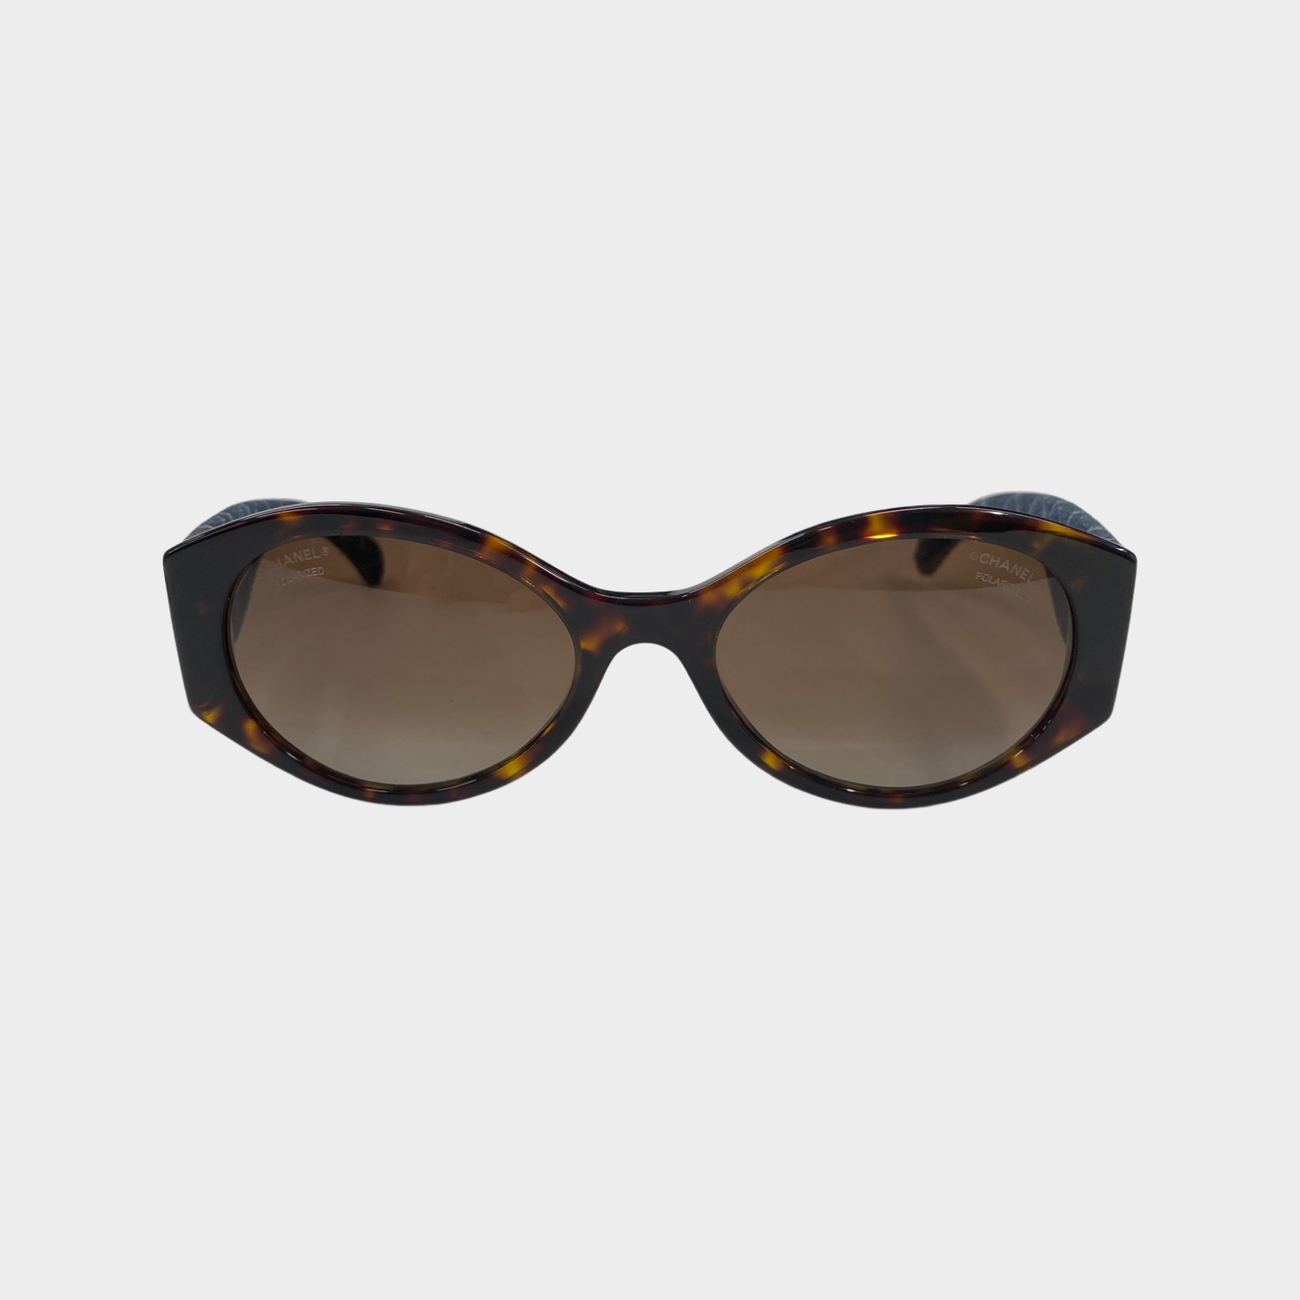 chanel square sunglasses black and beige